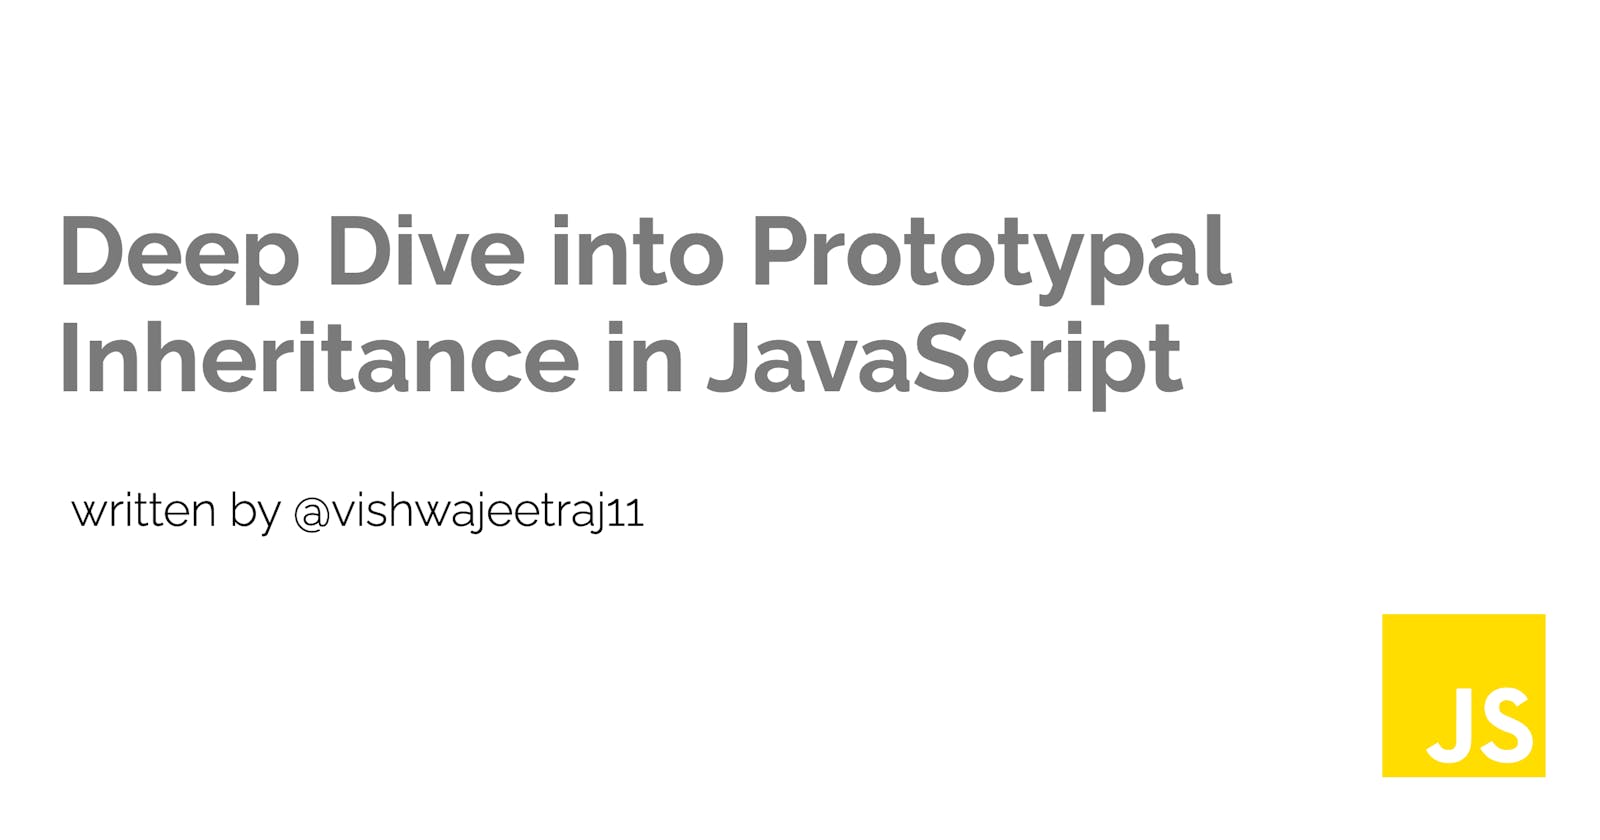 Deep Dive into Prototypal Inheritance in JavaScript